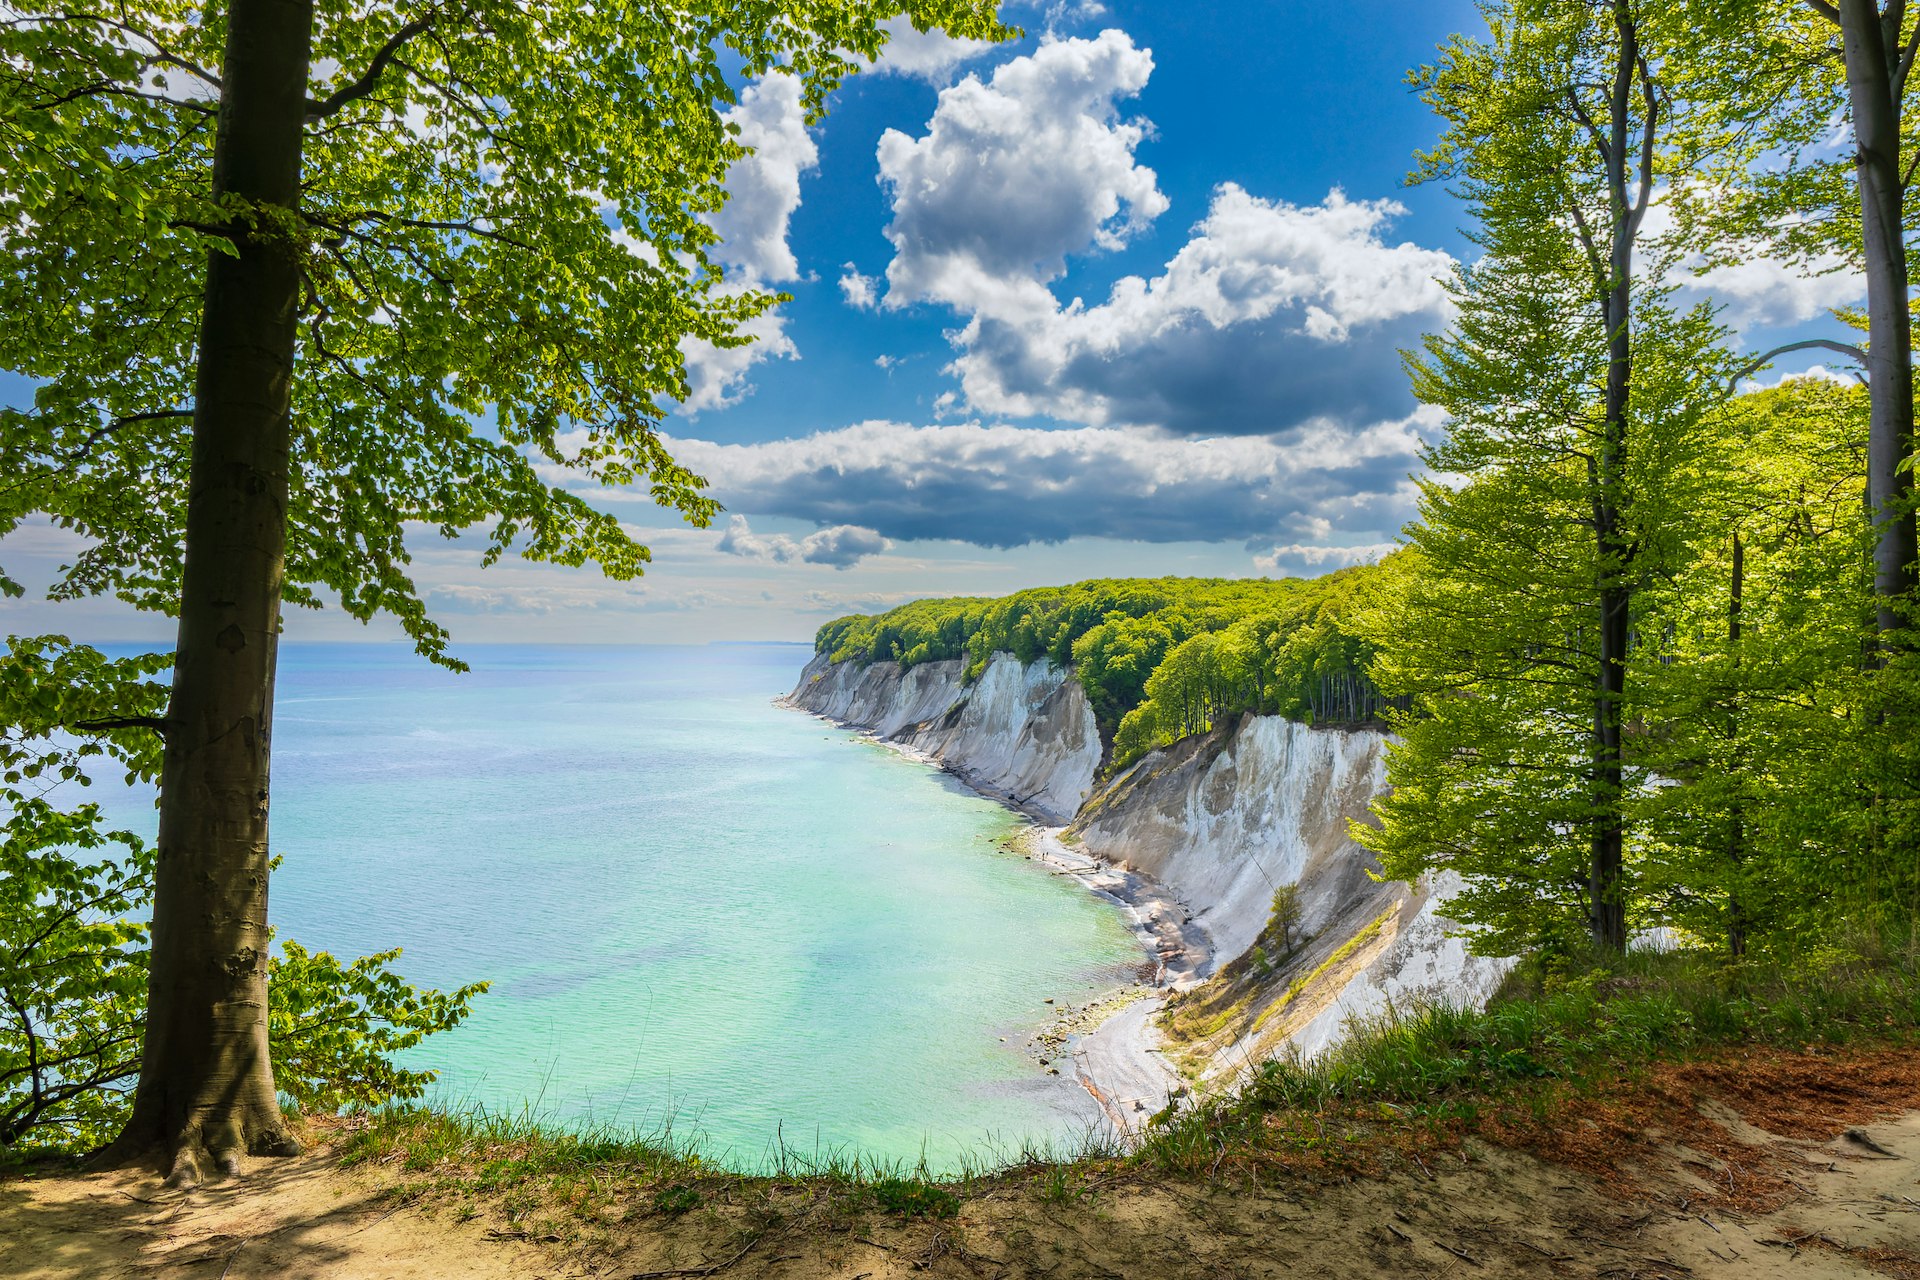 A series of white cliffs leading down to a beach